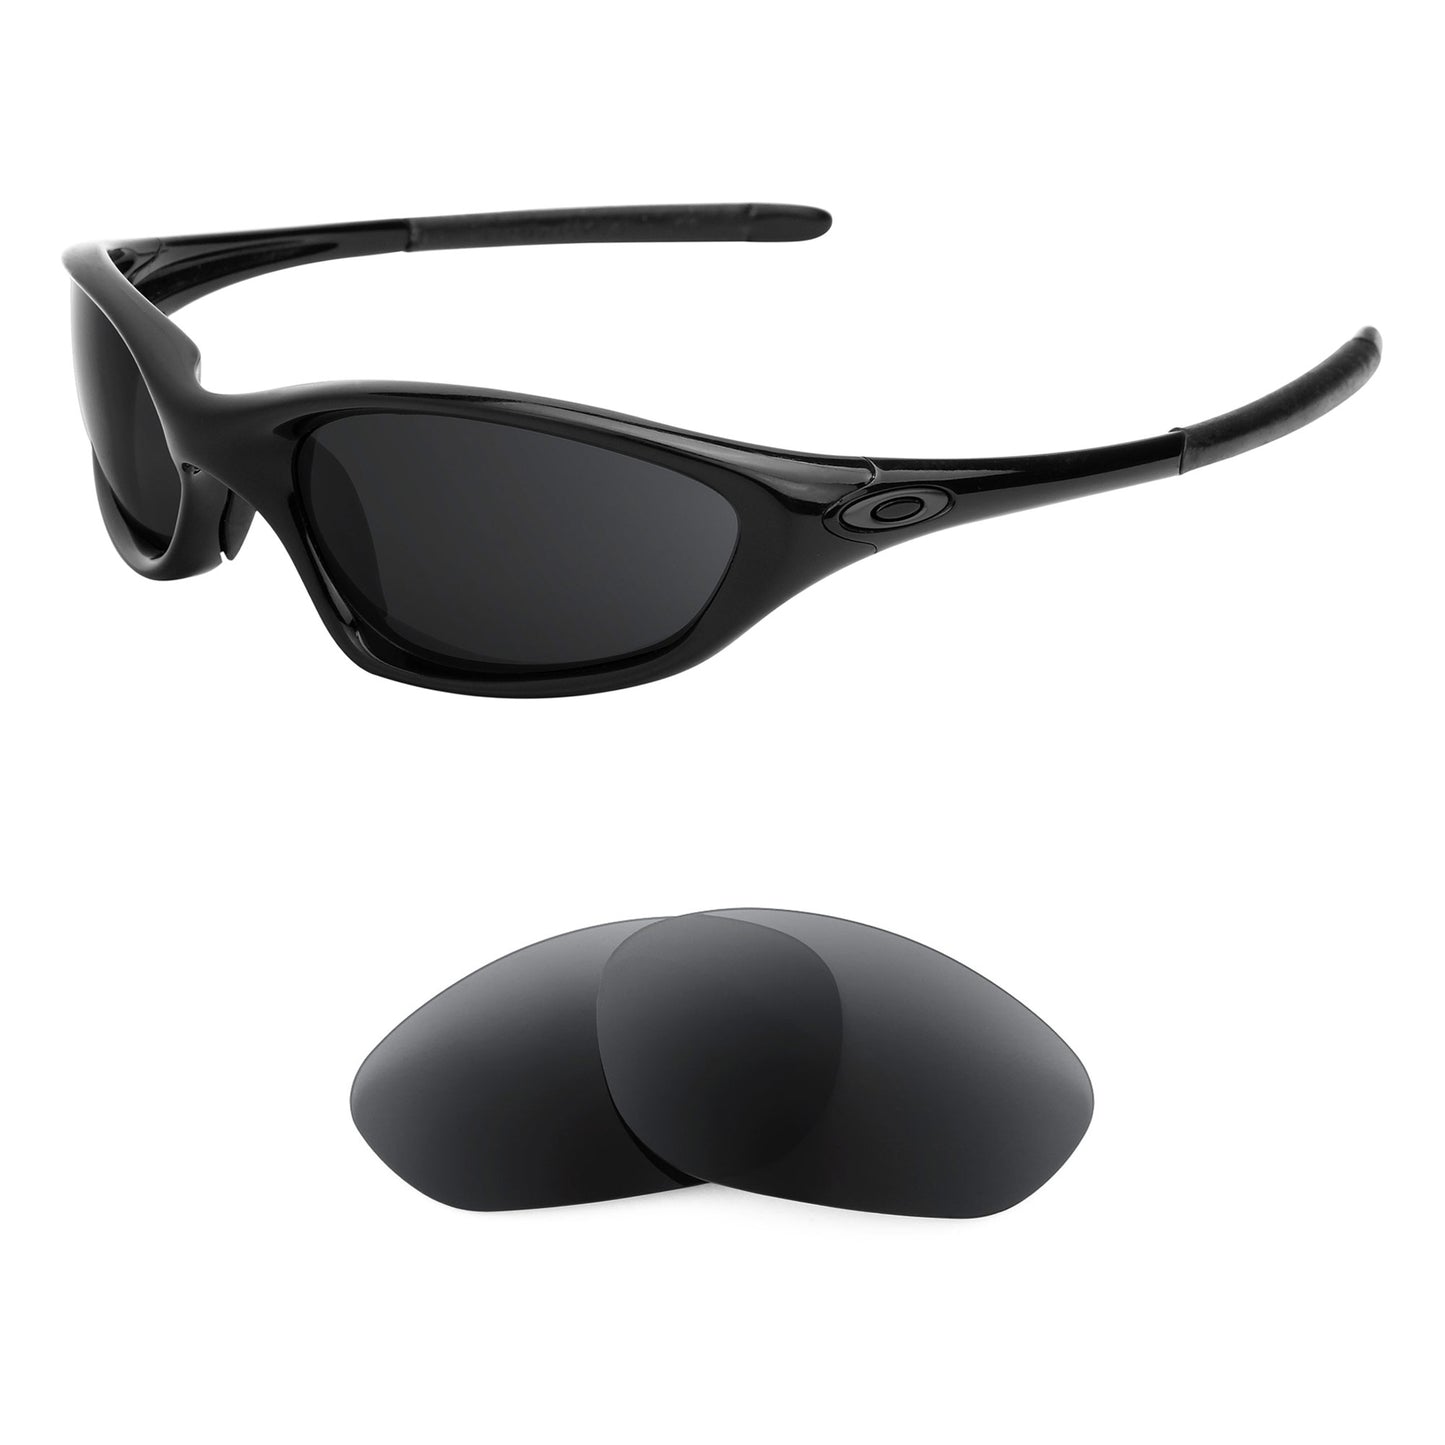 Oakley Twenty XX (2000) sunglasses with replacement lenses